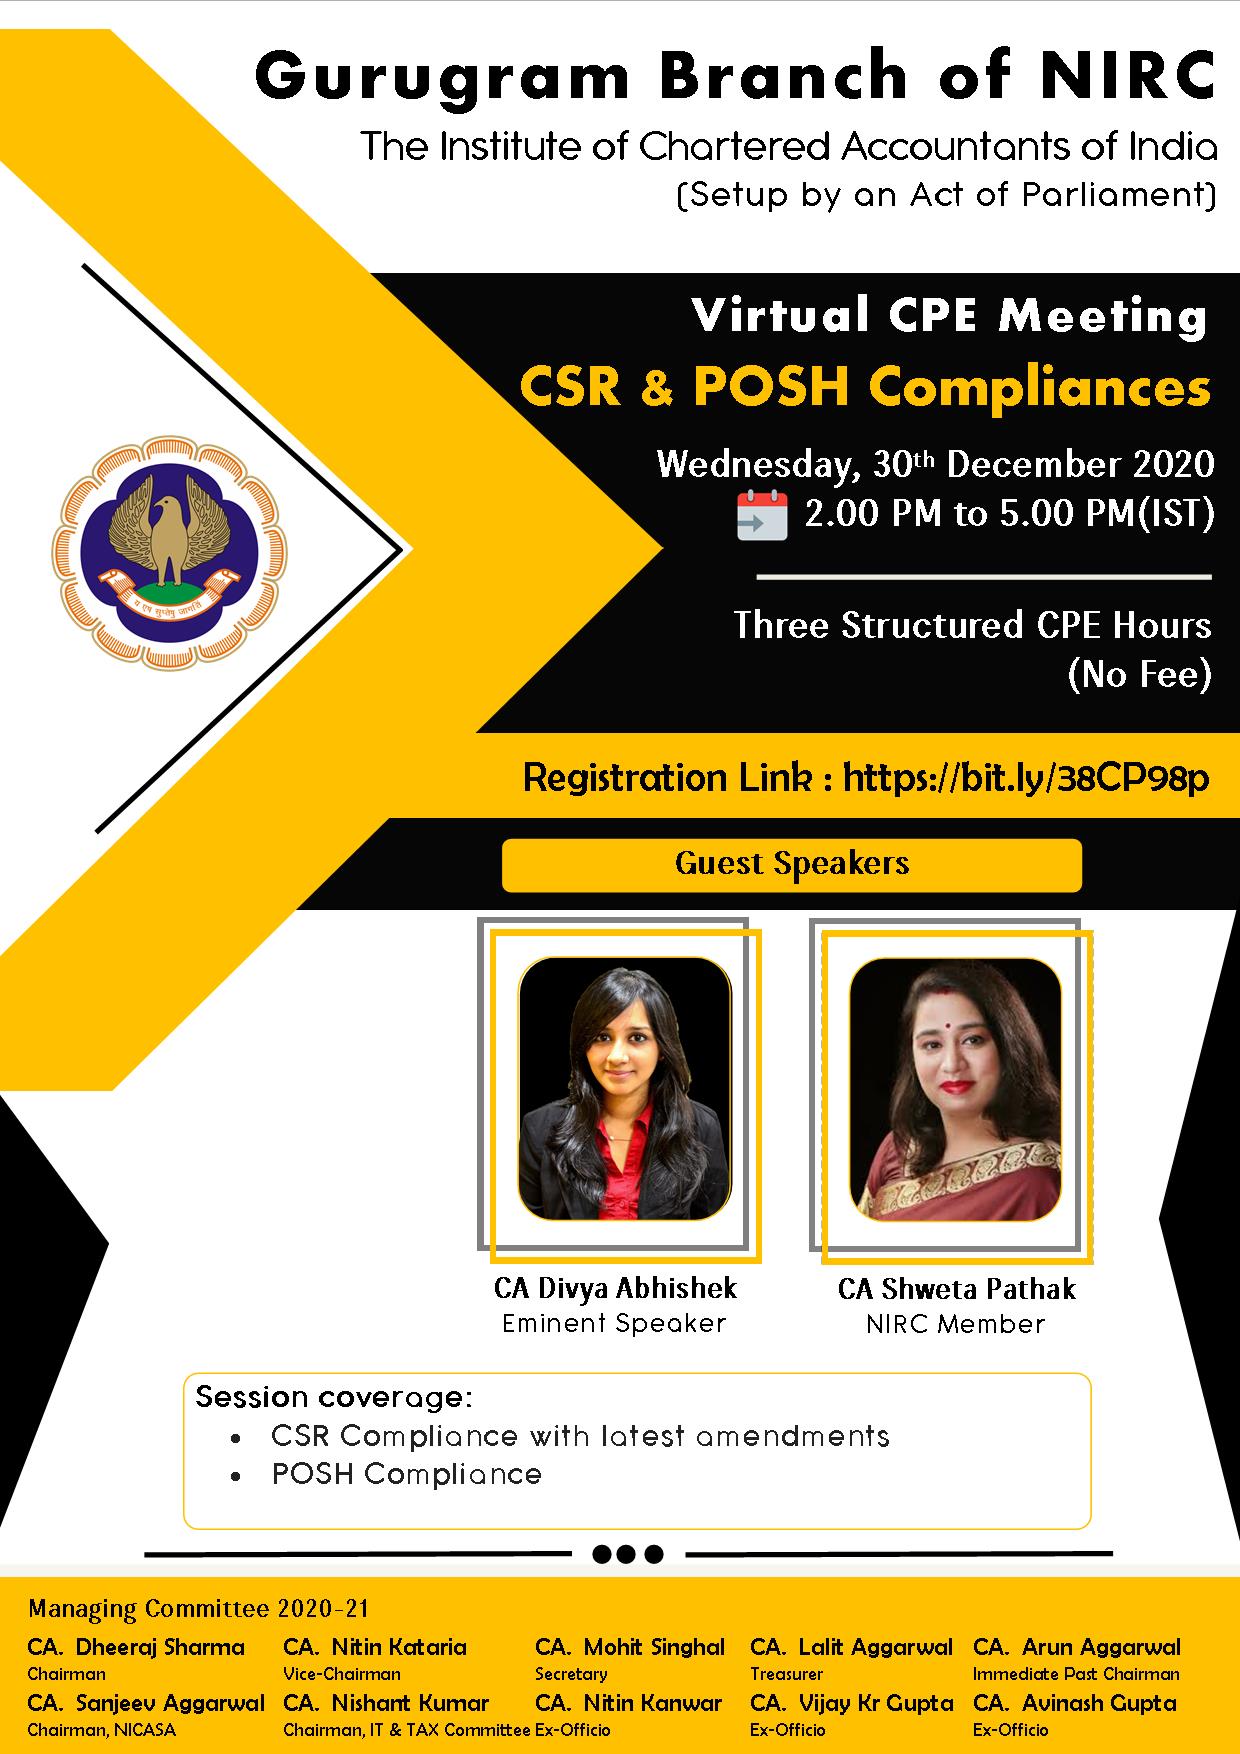 Virtual CPE Meeting on CSR & POSH Compliances